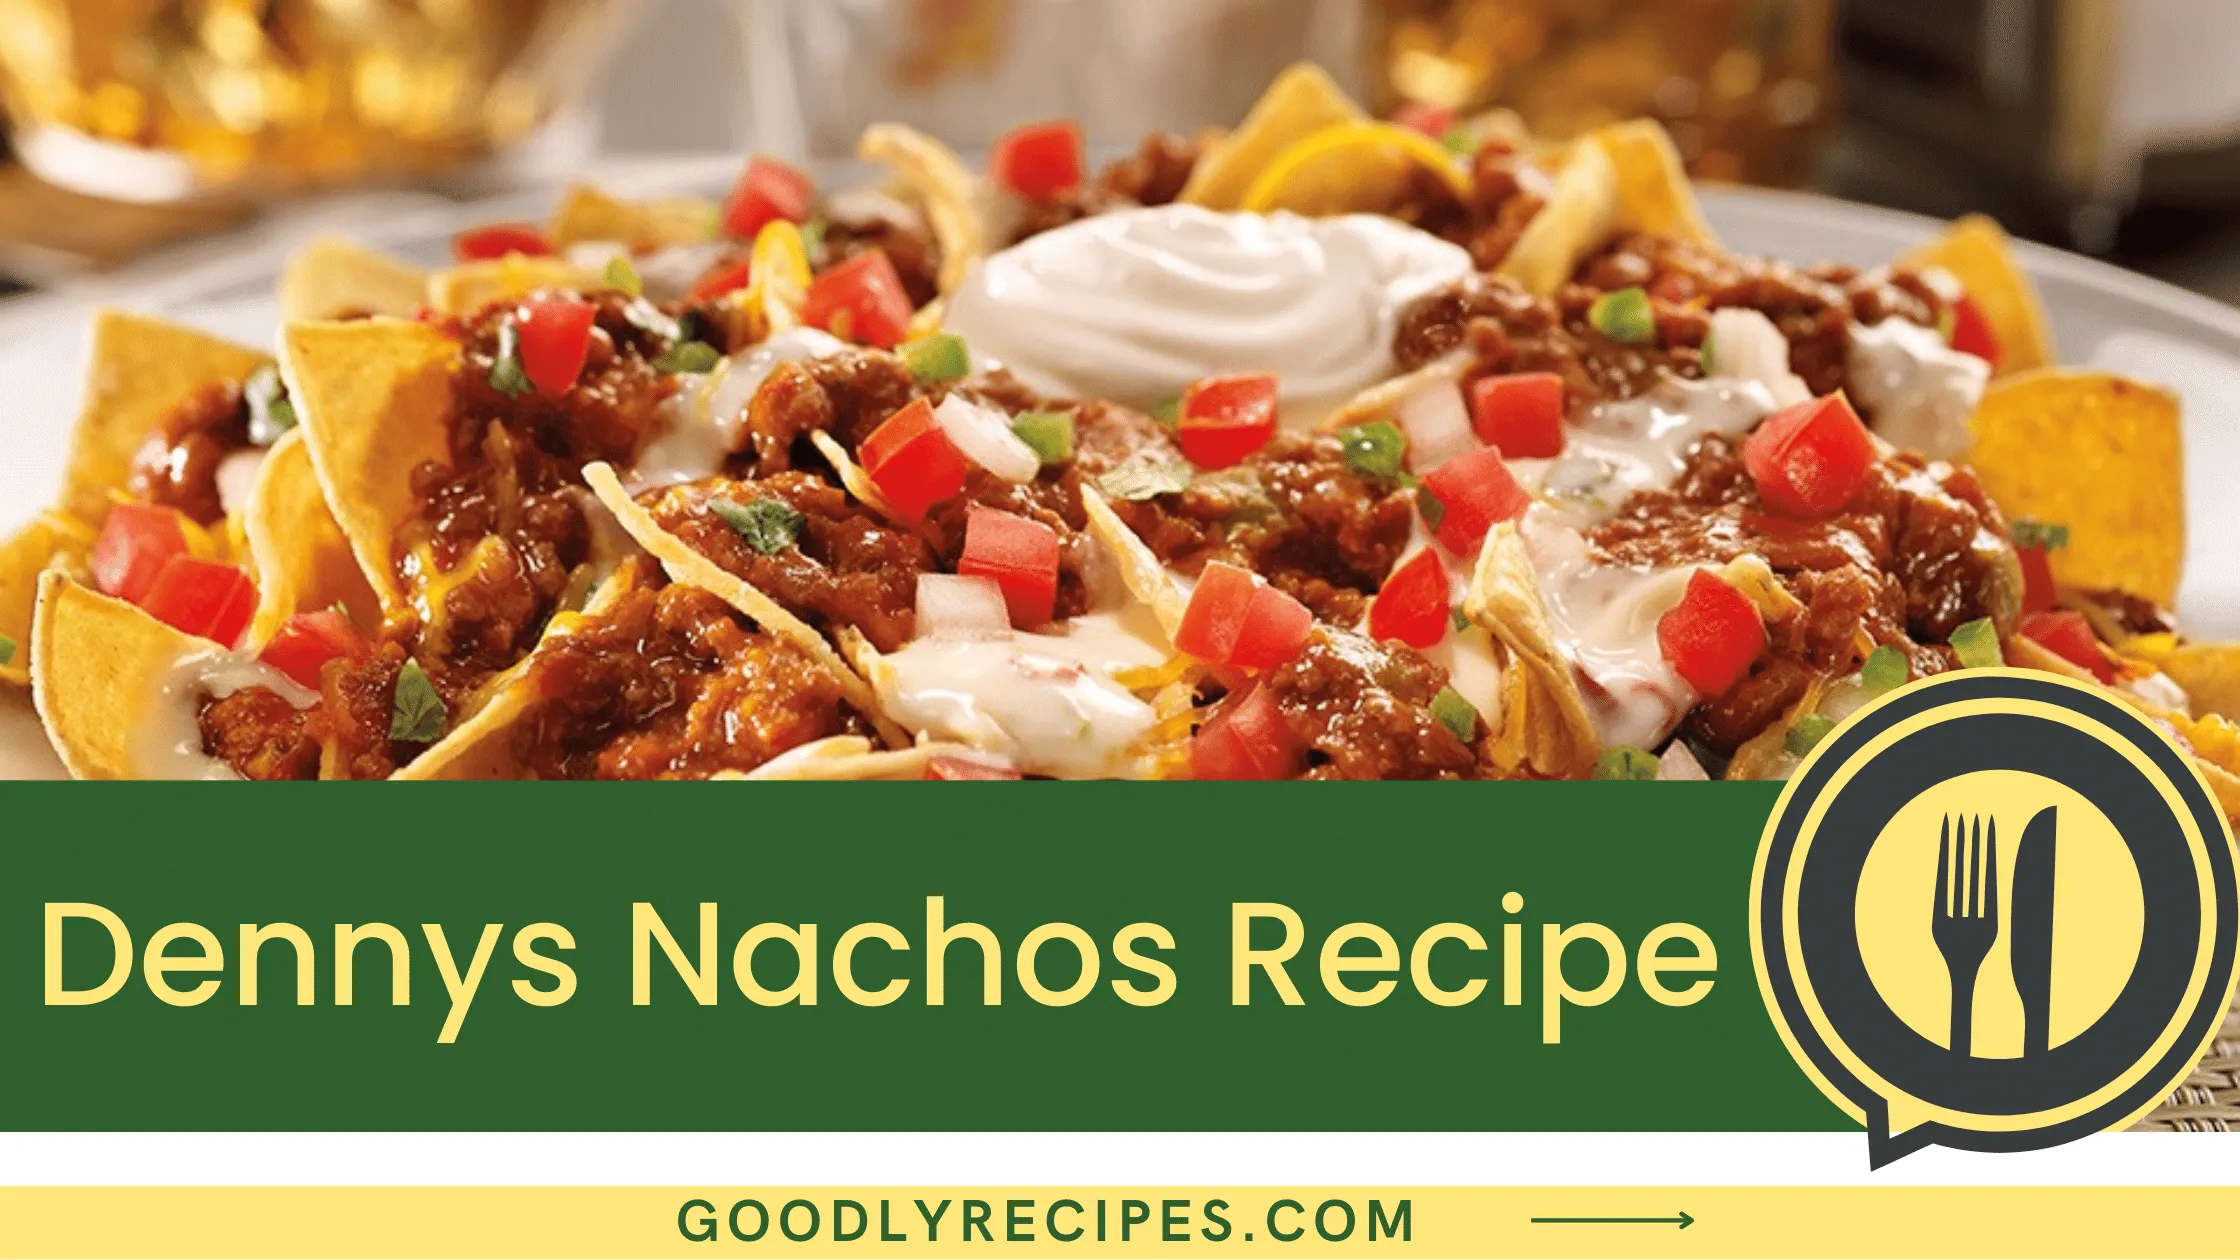 Denny's Nachos Recipe - For Food Lovers